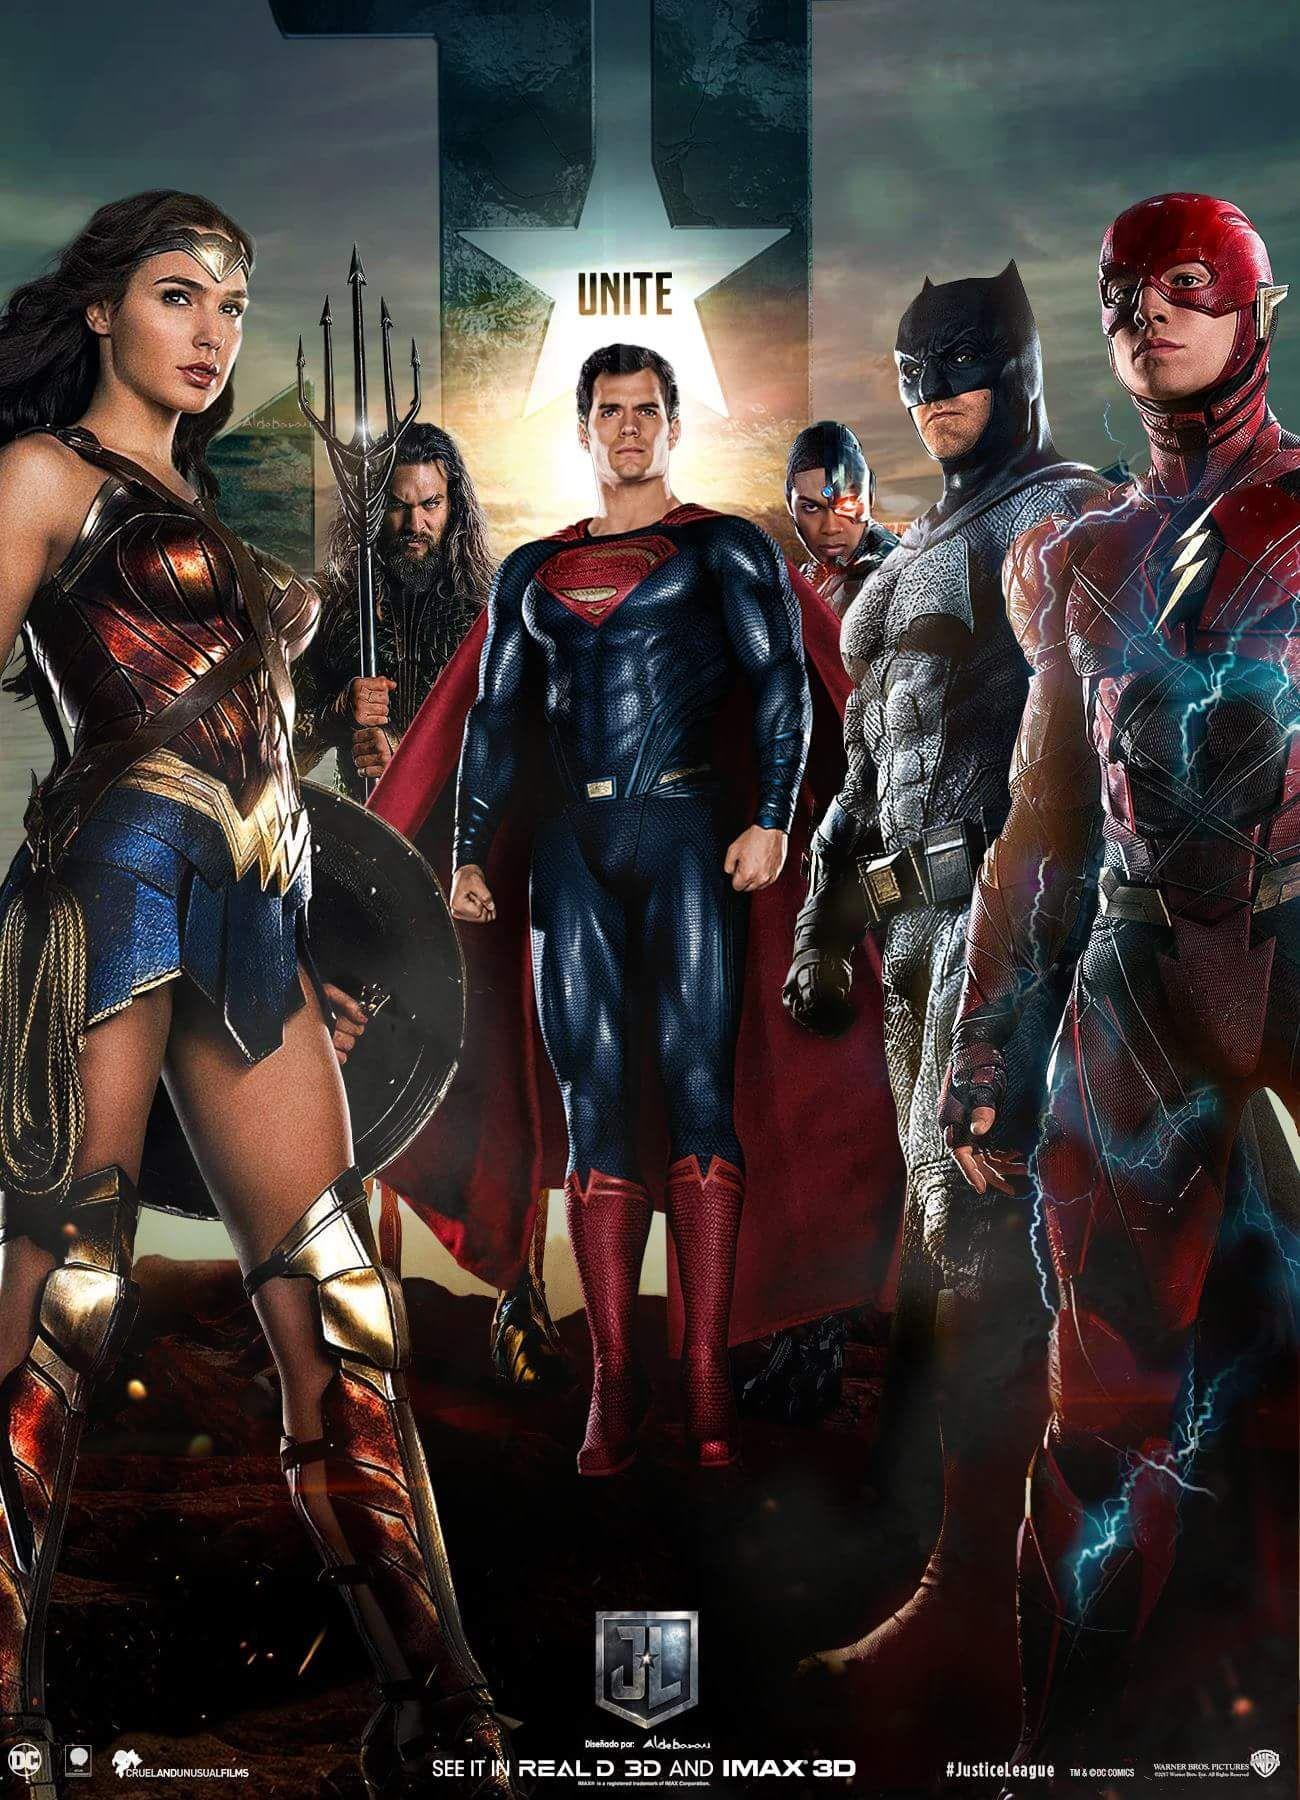 JusticeLeague movie poster 4. Batman v Superman